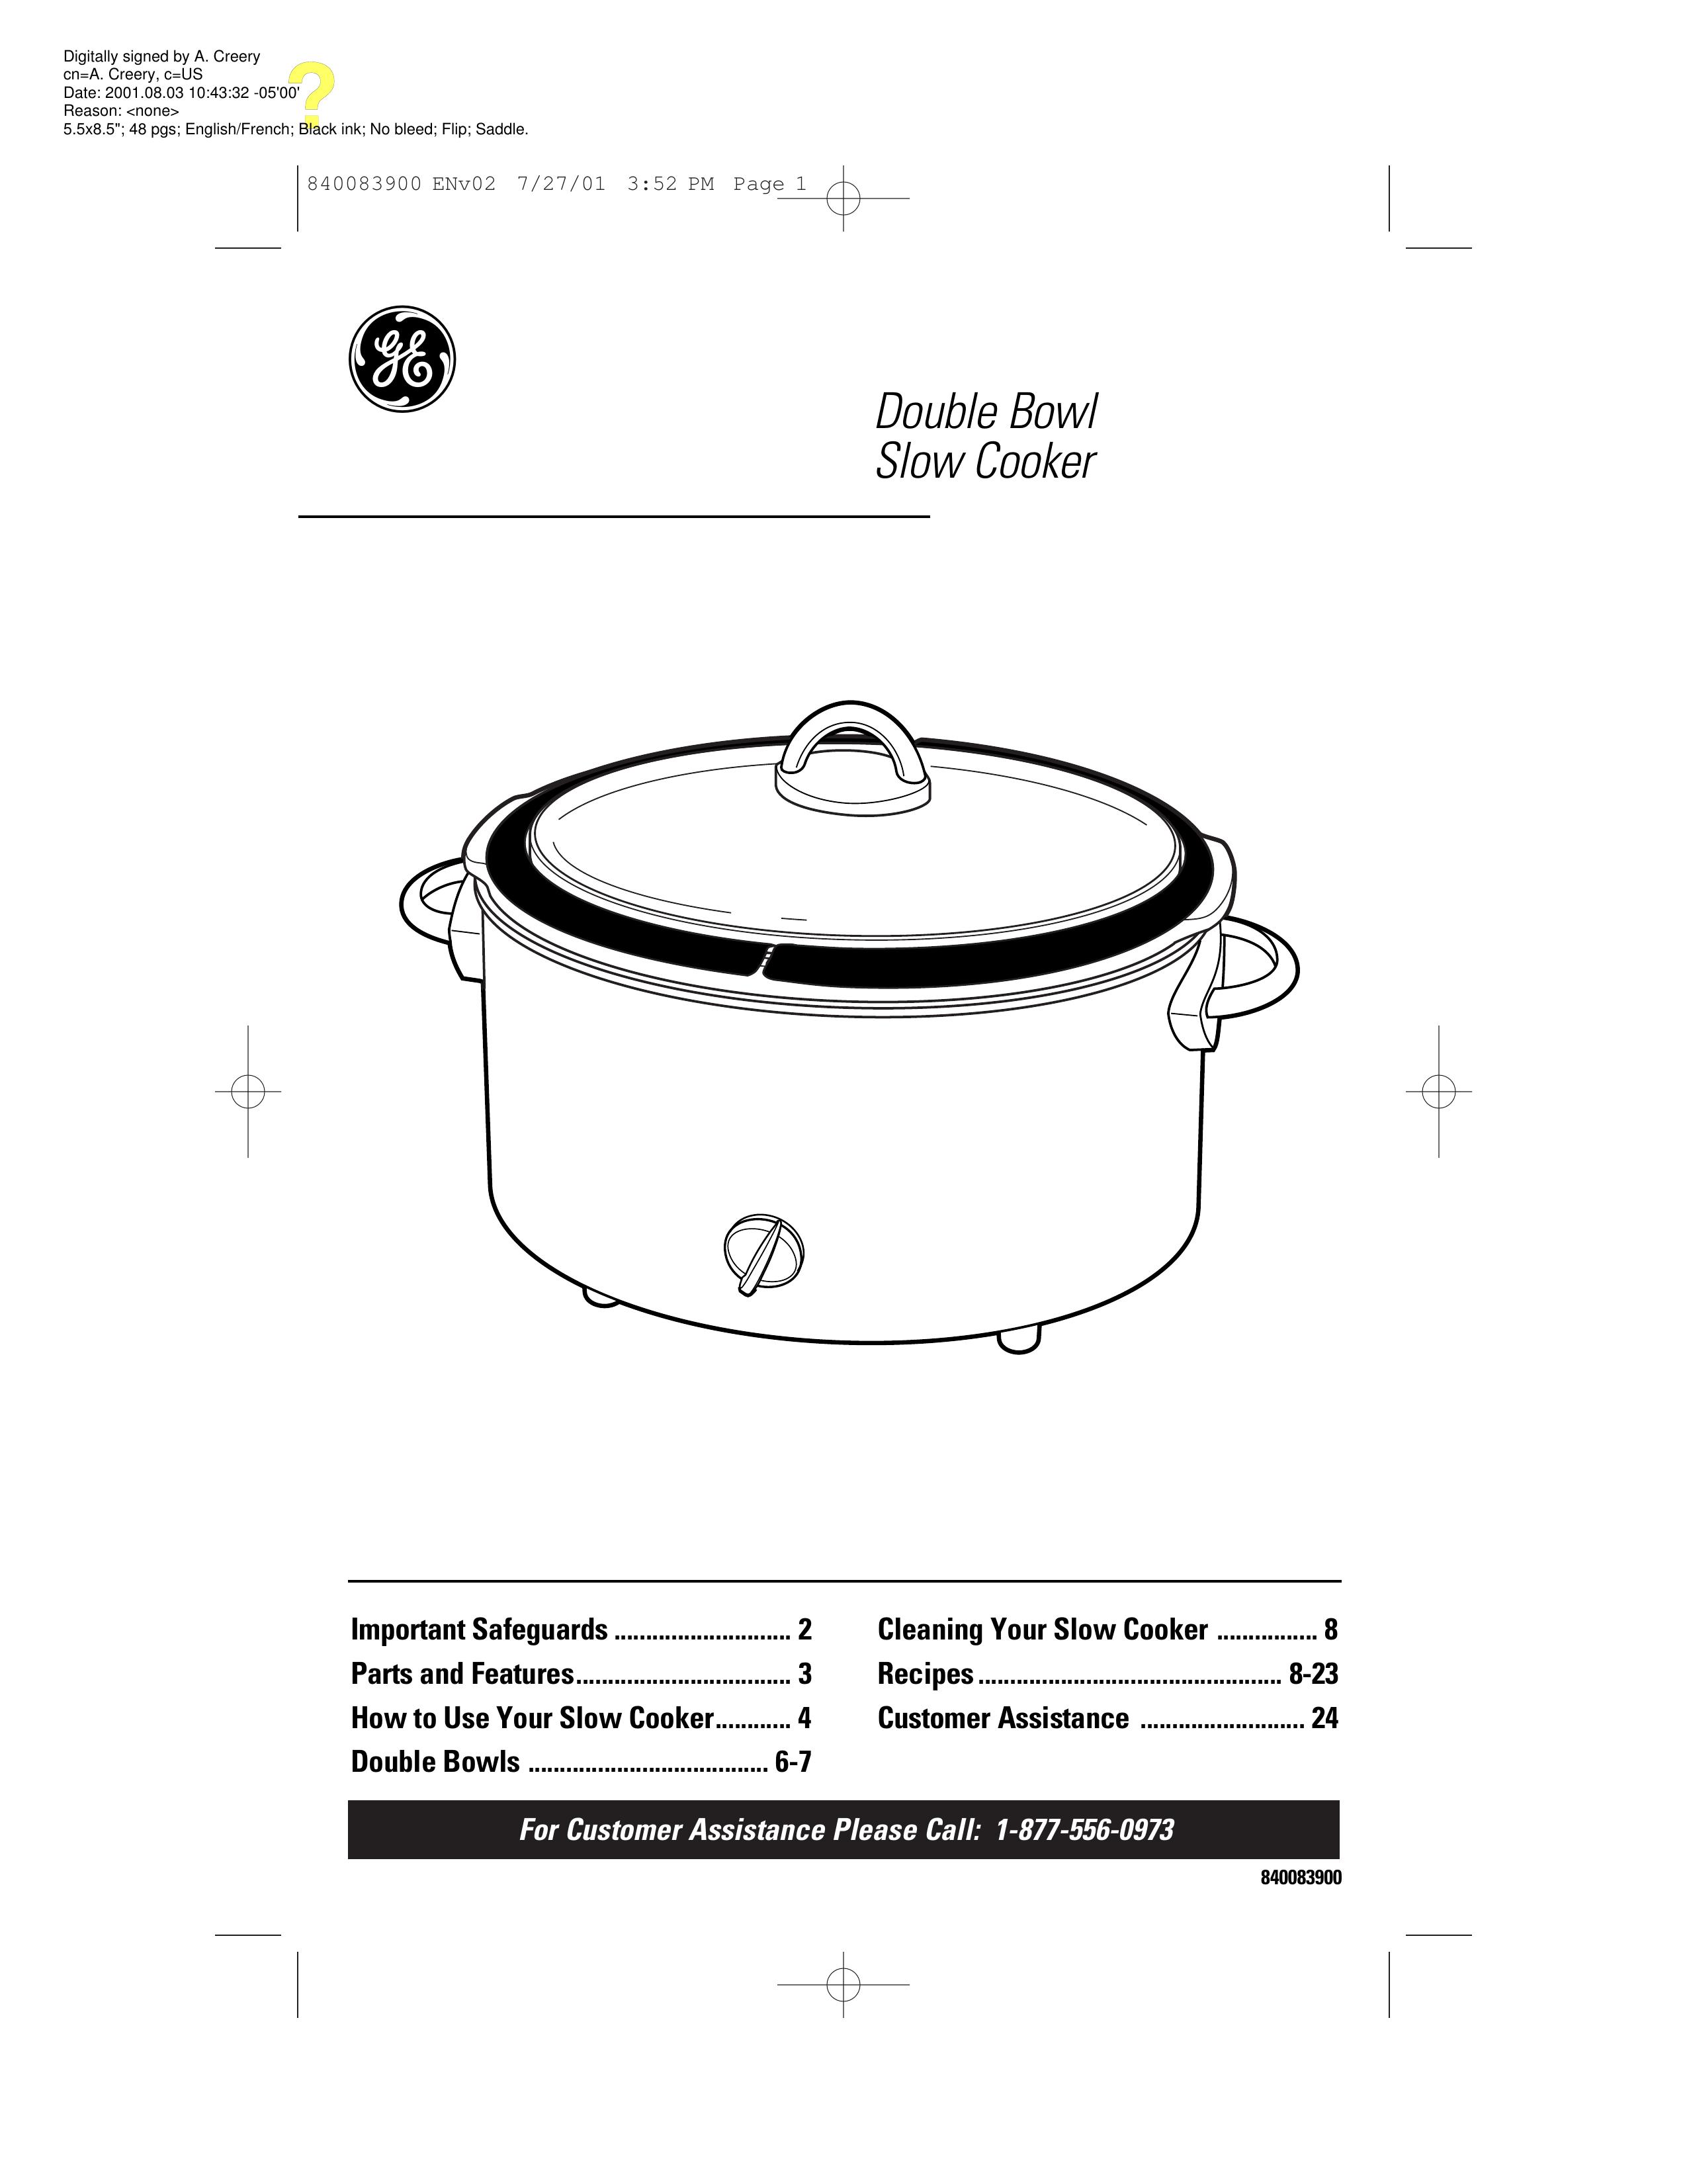 GE 840083900 Slow Cooker User Manual